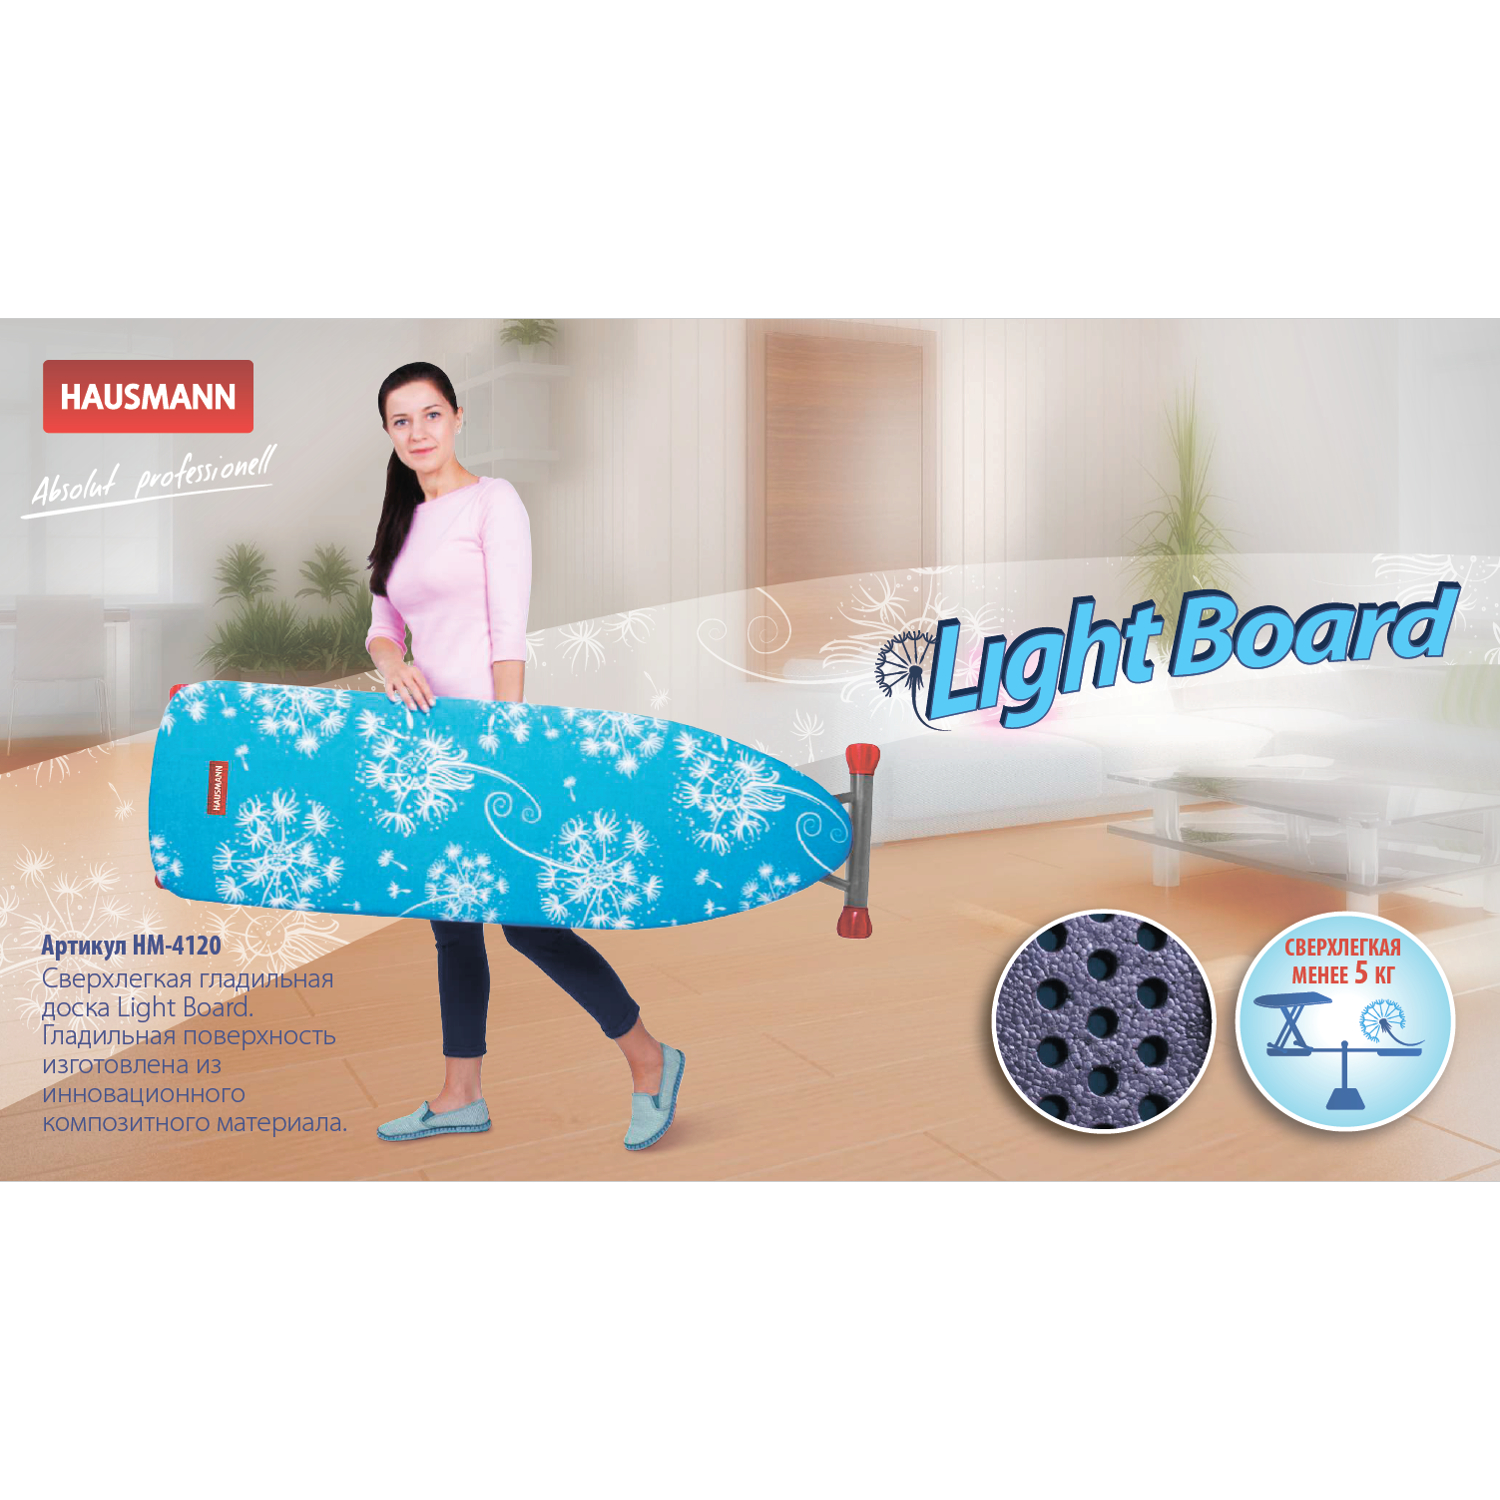    Light Board (Hausmann HM-4120)